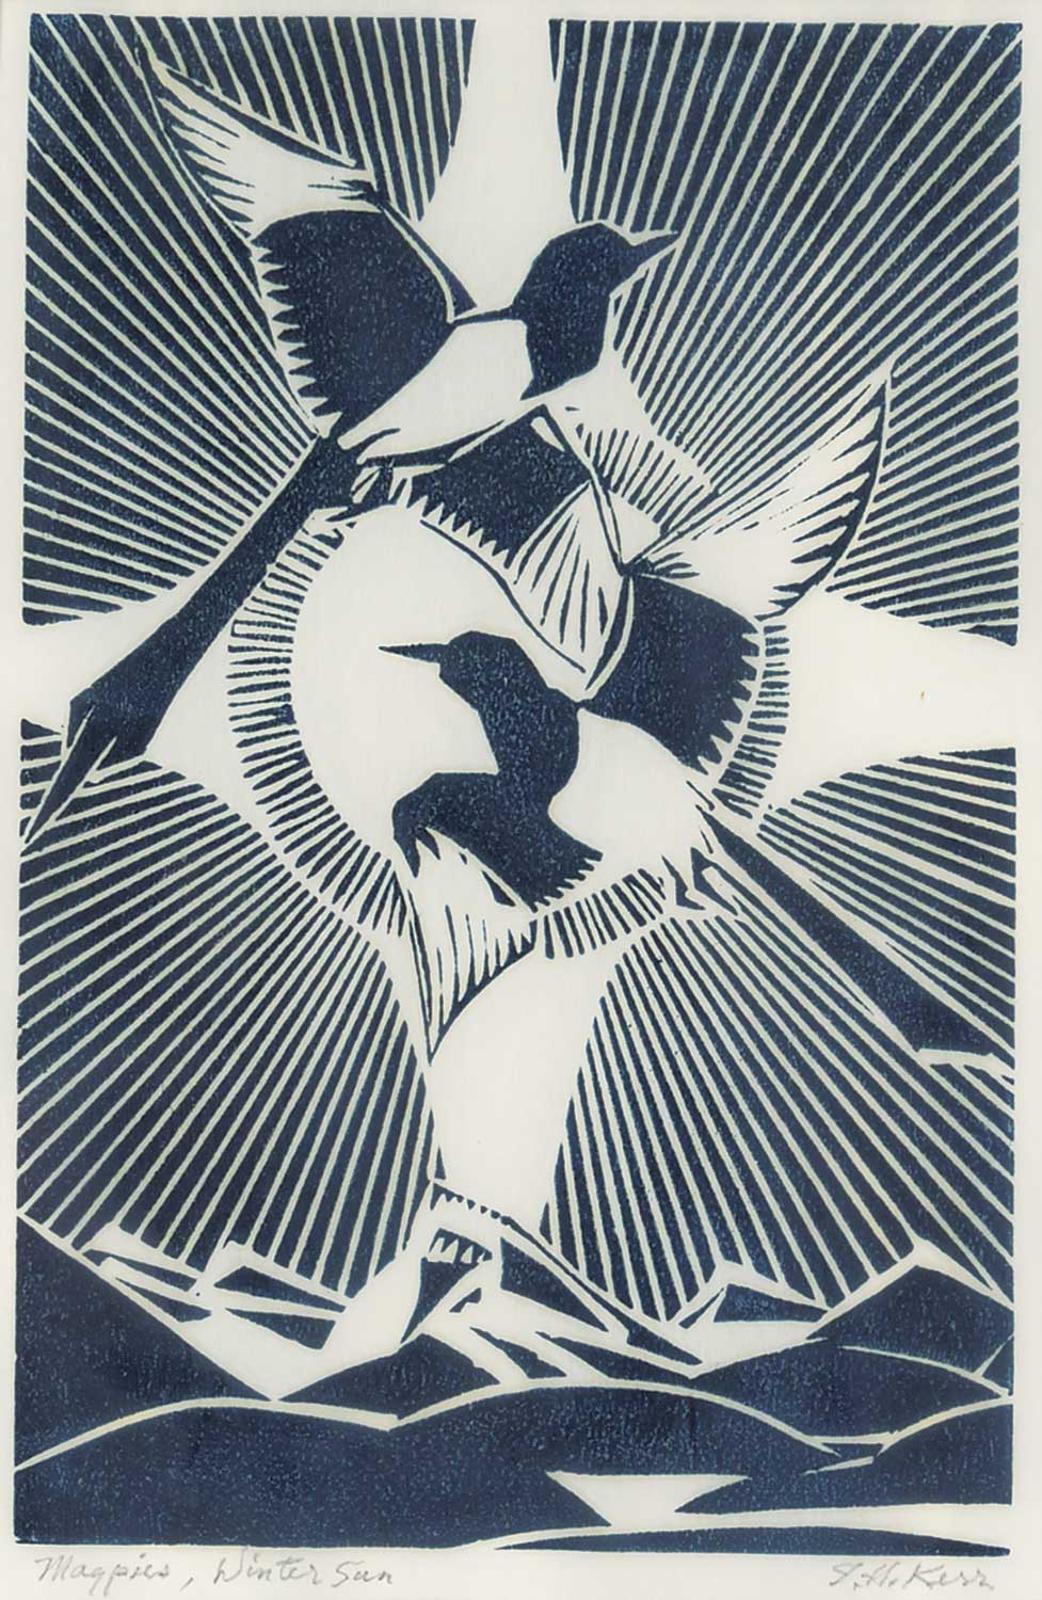 Illingworth Holey (Buck) Kerr (1905-1989) - Magpies, Winter Sun